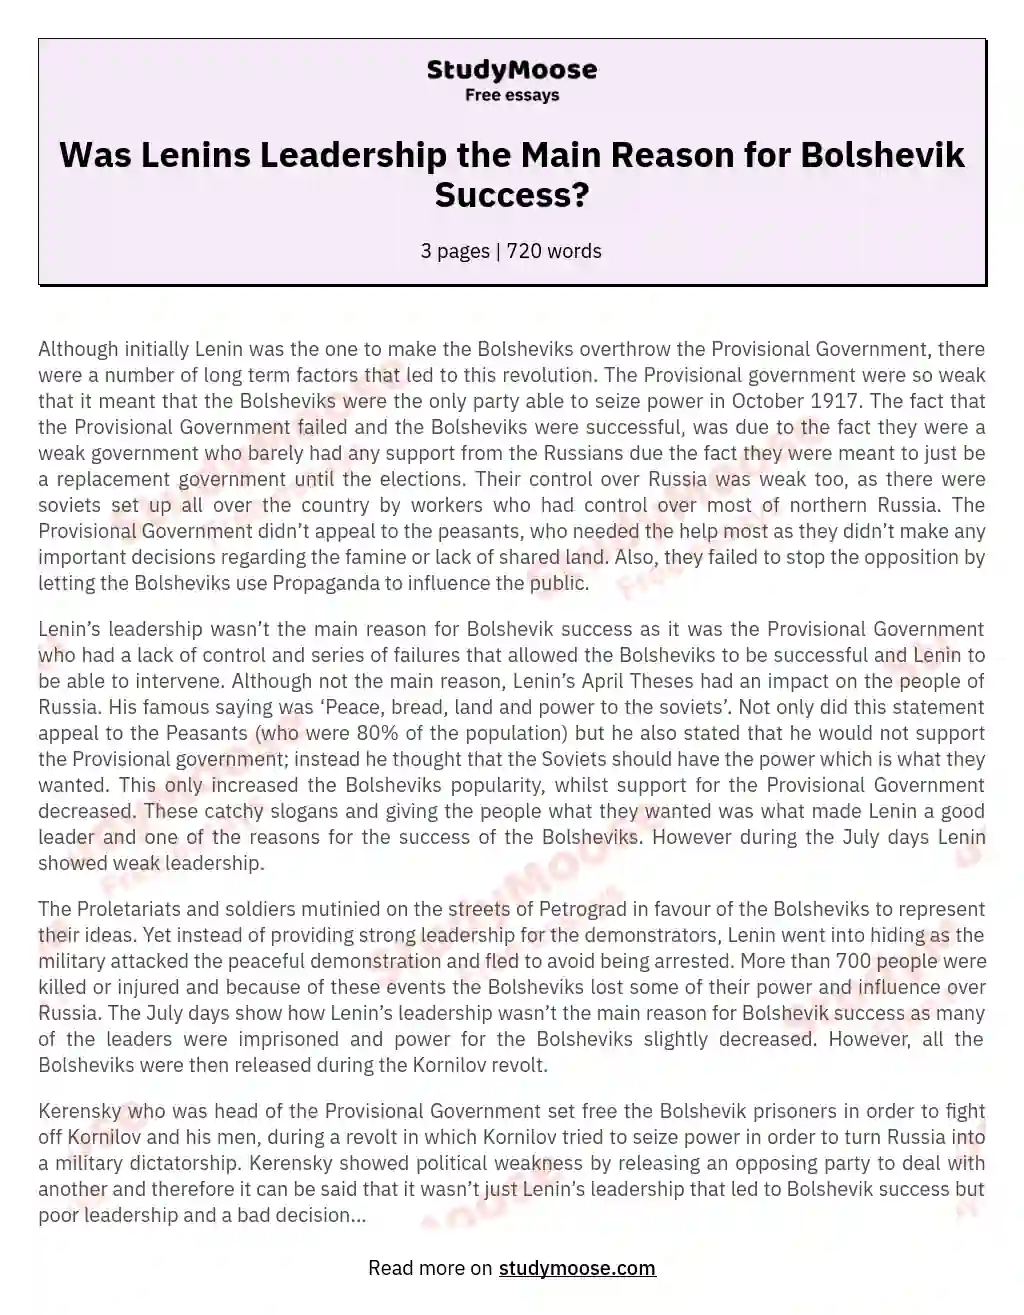 Was Lenins Leadership the Main Reason for Bolshevik Success? essay